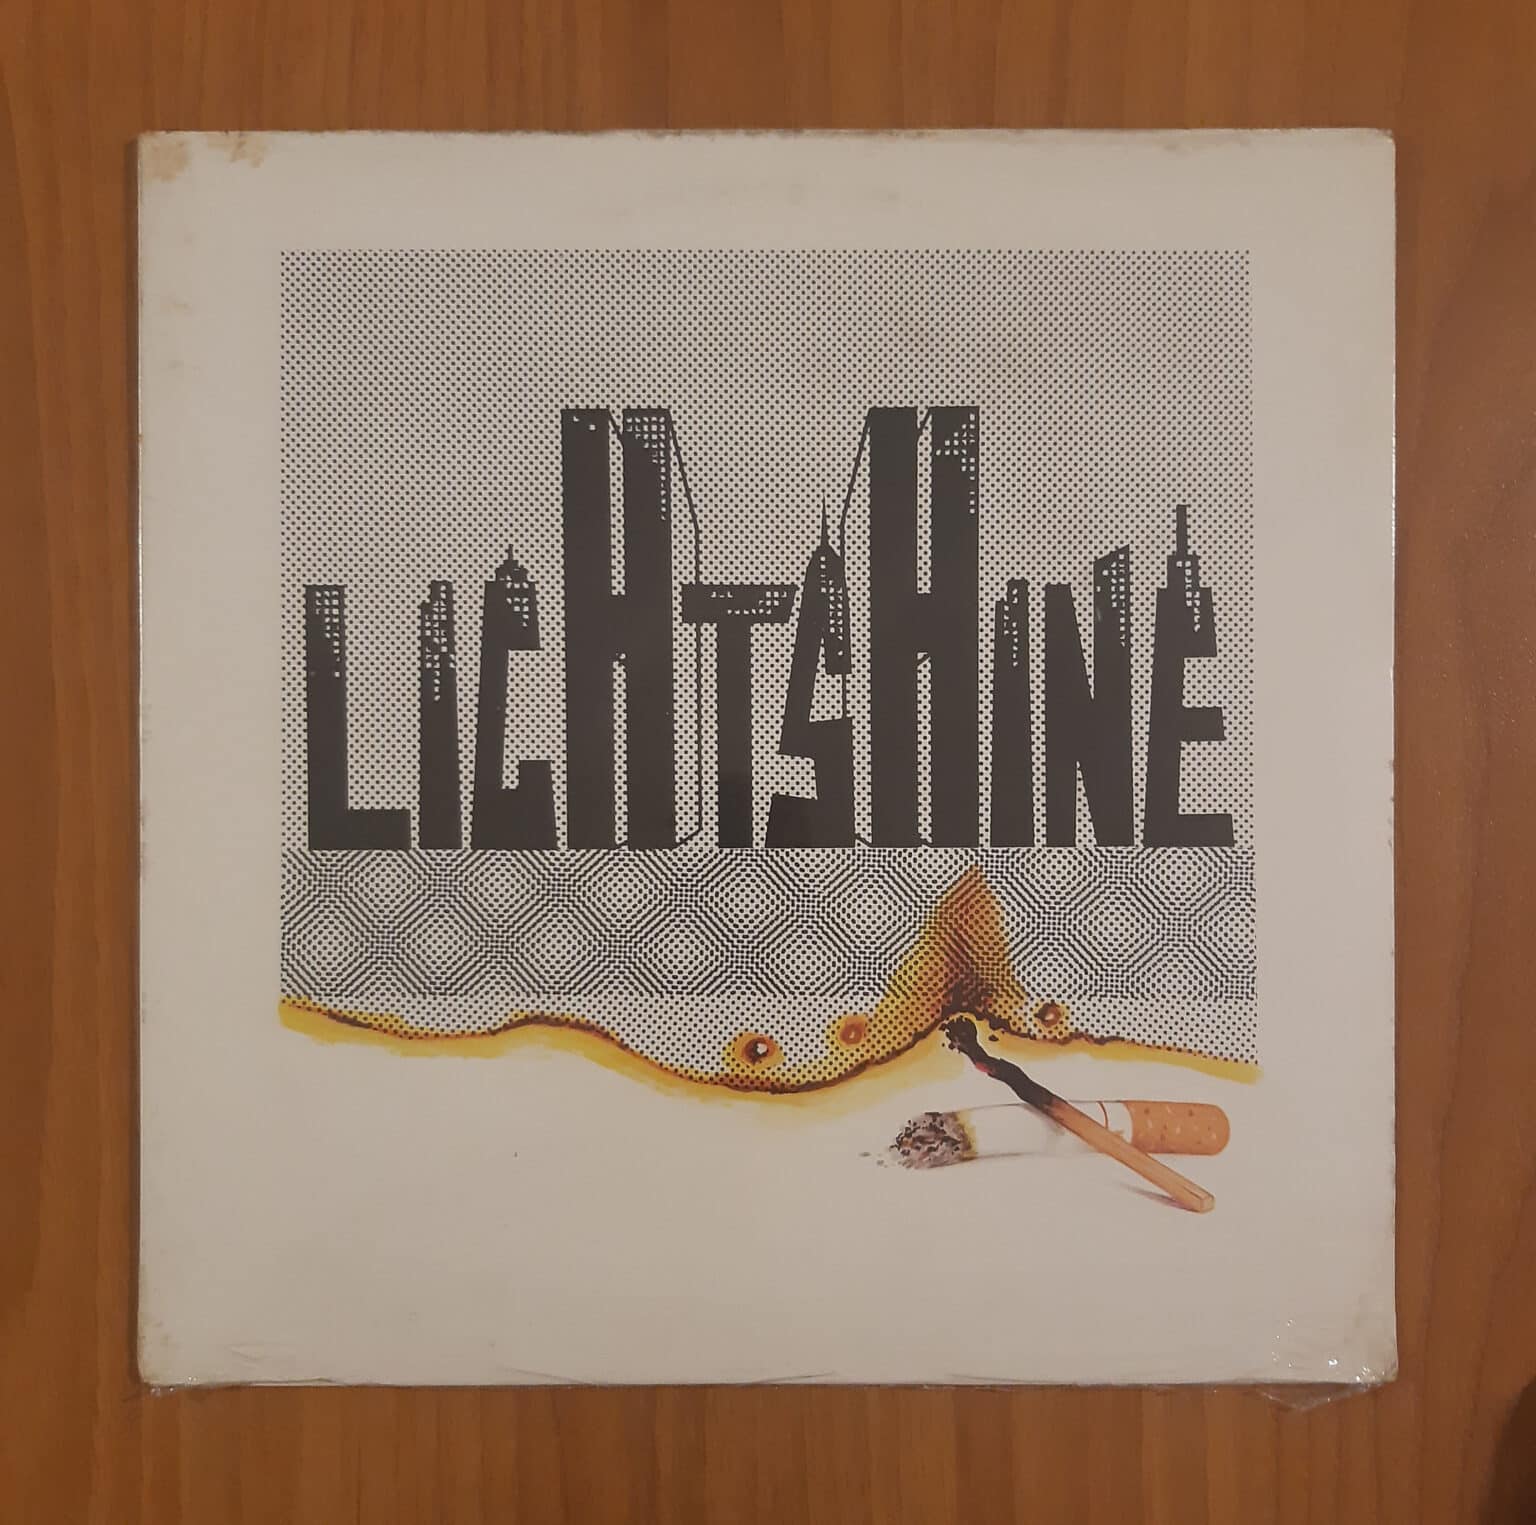 Lightshine: Lightshine Hi-Fi e Vinili